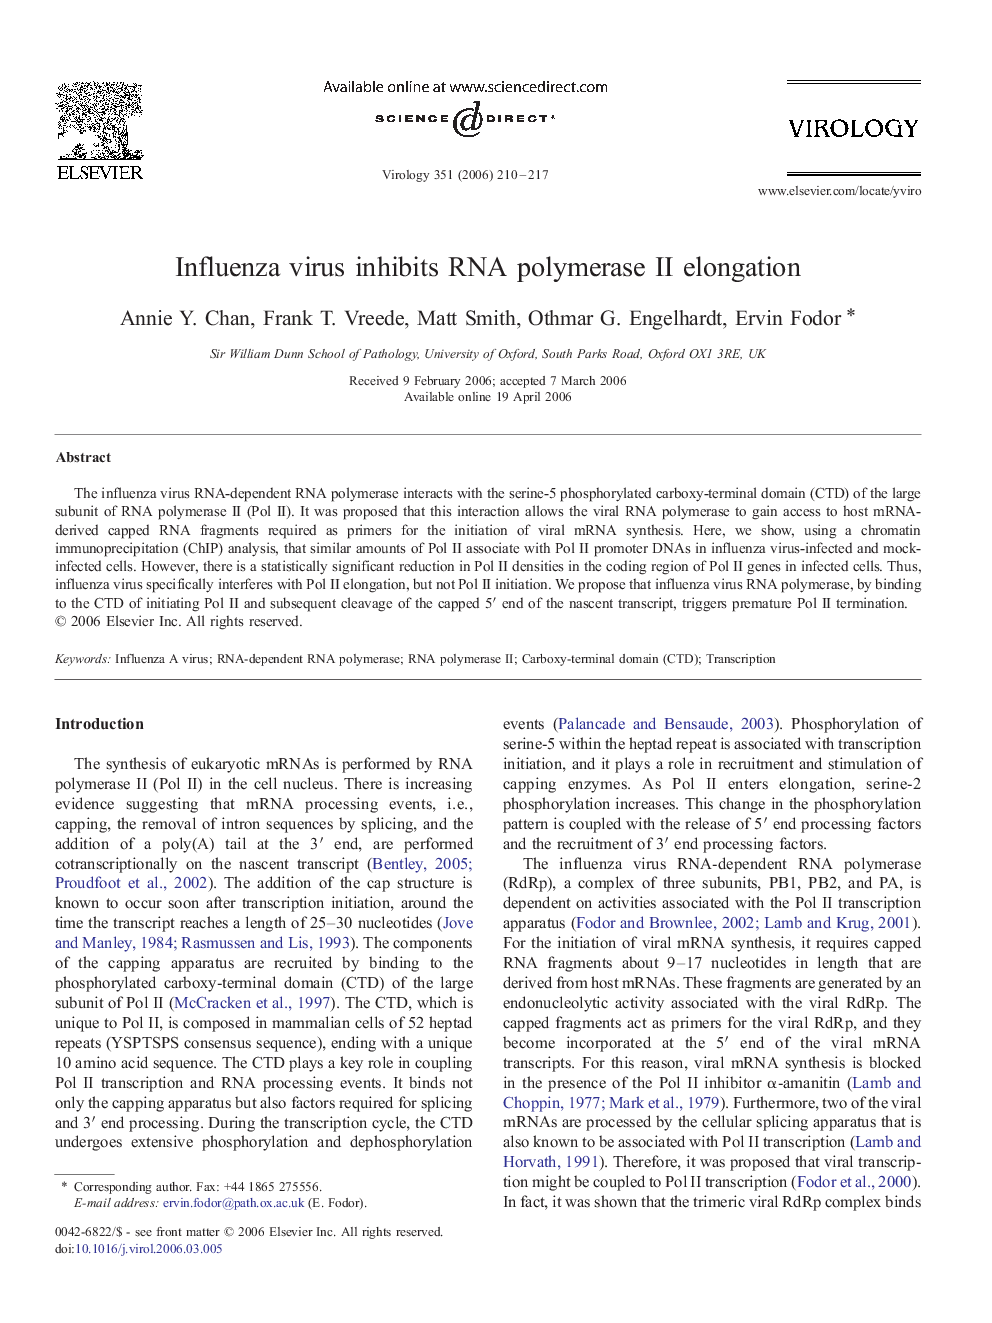 Influenza virus inhibits RNA polymerase II elongation